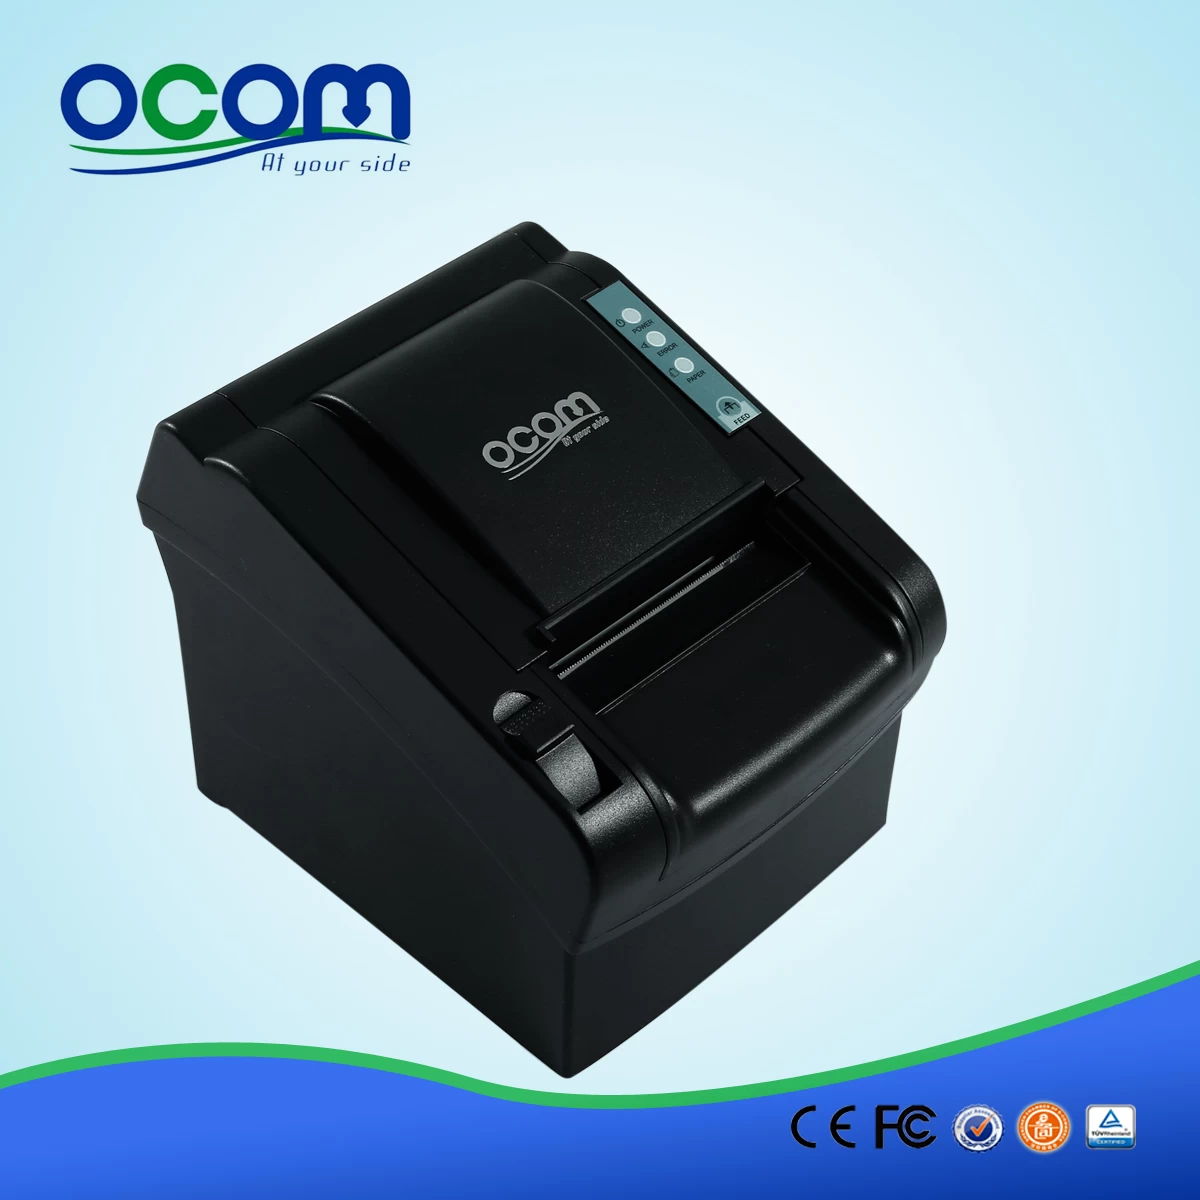 Desktop Quality 80mm POS Thermal Printer China Factory Price